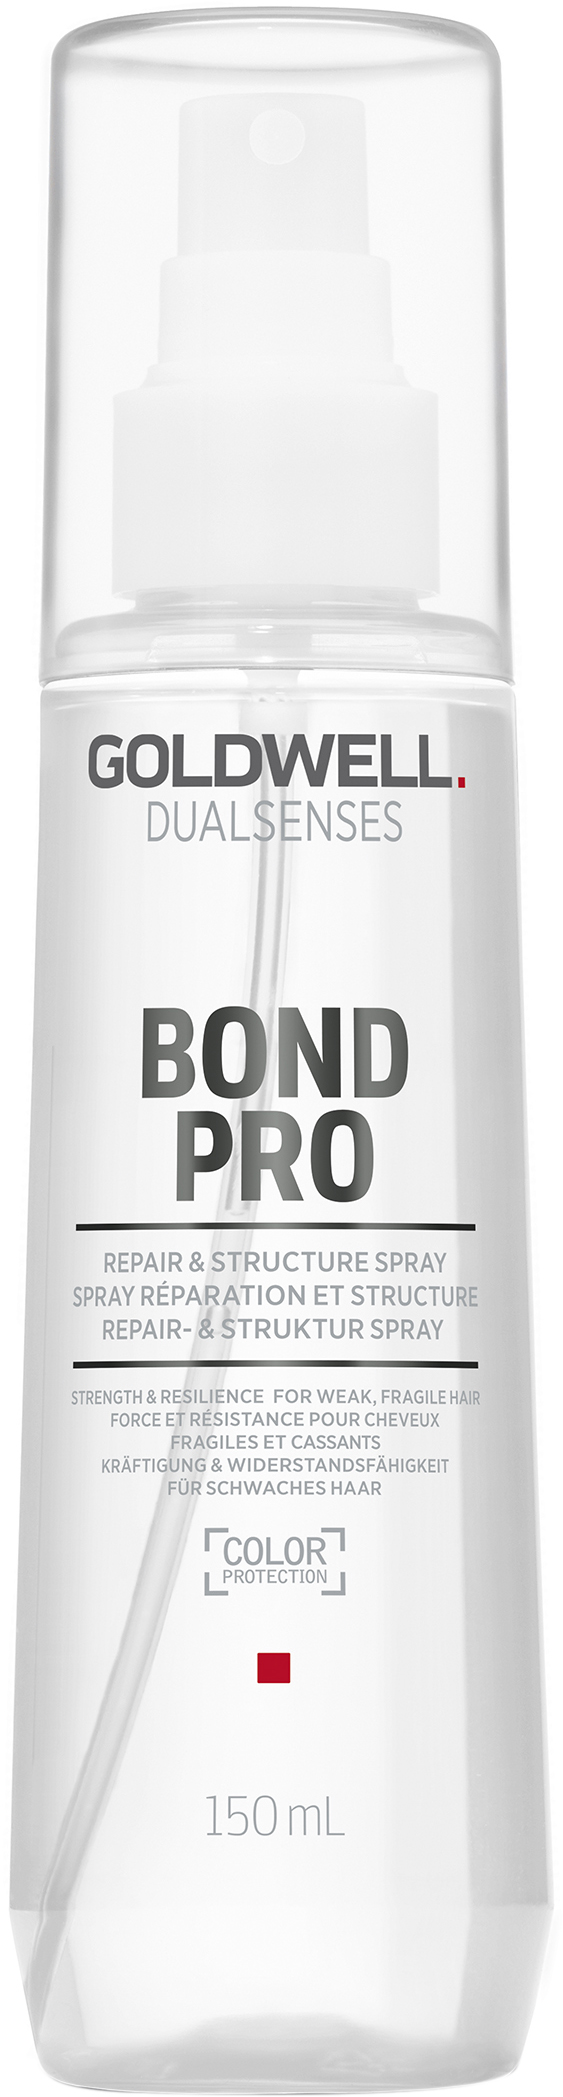 Gоldwell dualsenses bond pro structure spray спрей сыворотка укрепляющая для тонких и ломких волос 150 мл 9д)